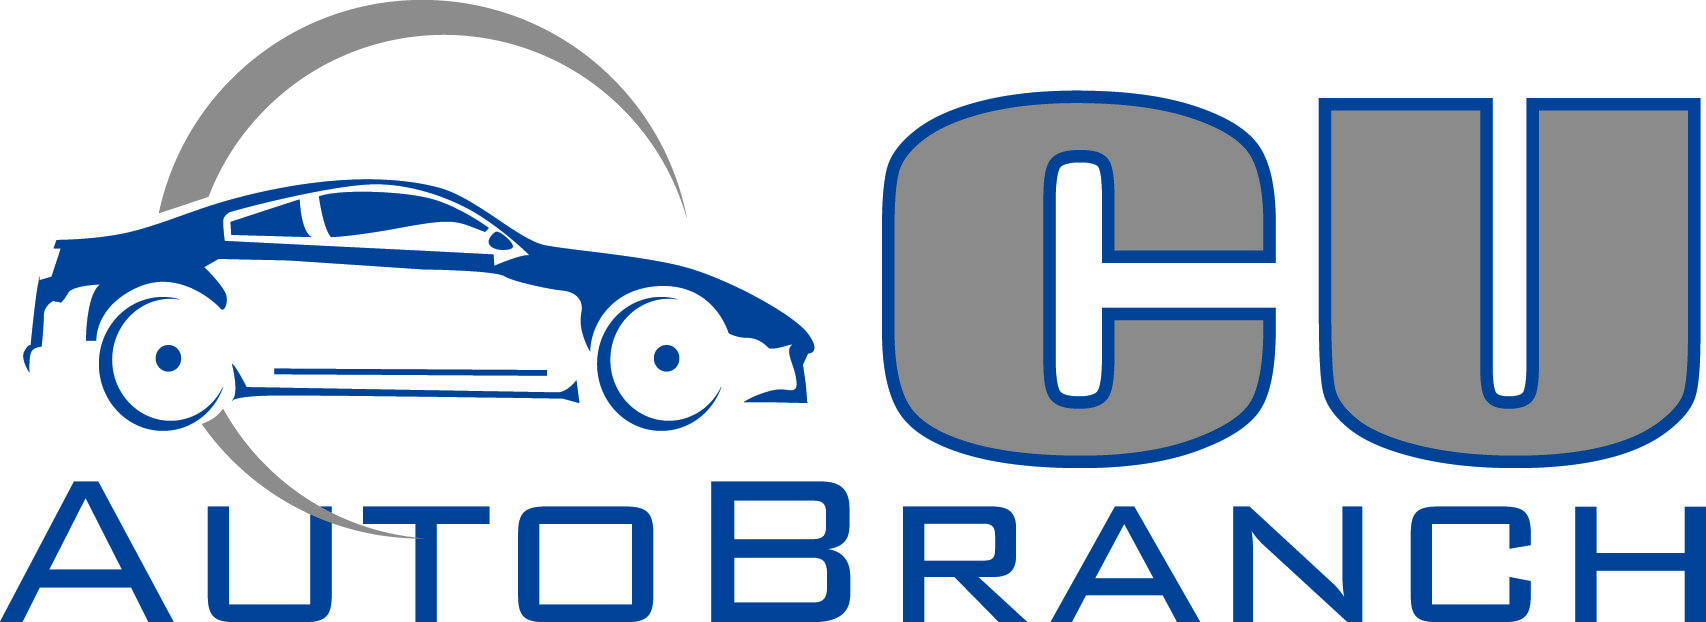 CU Auto Branch